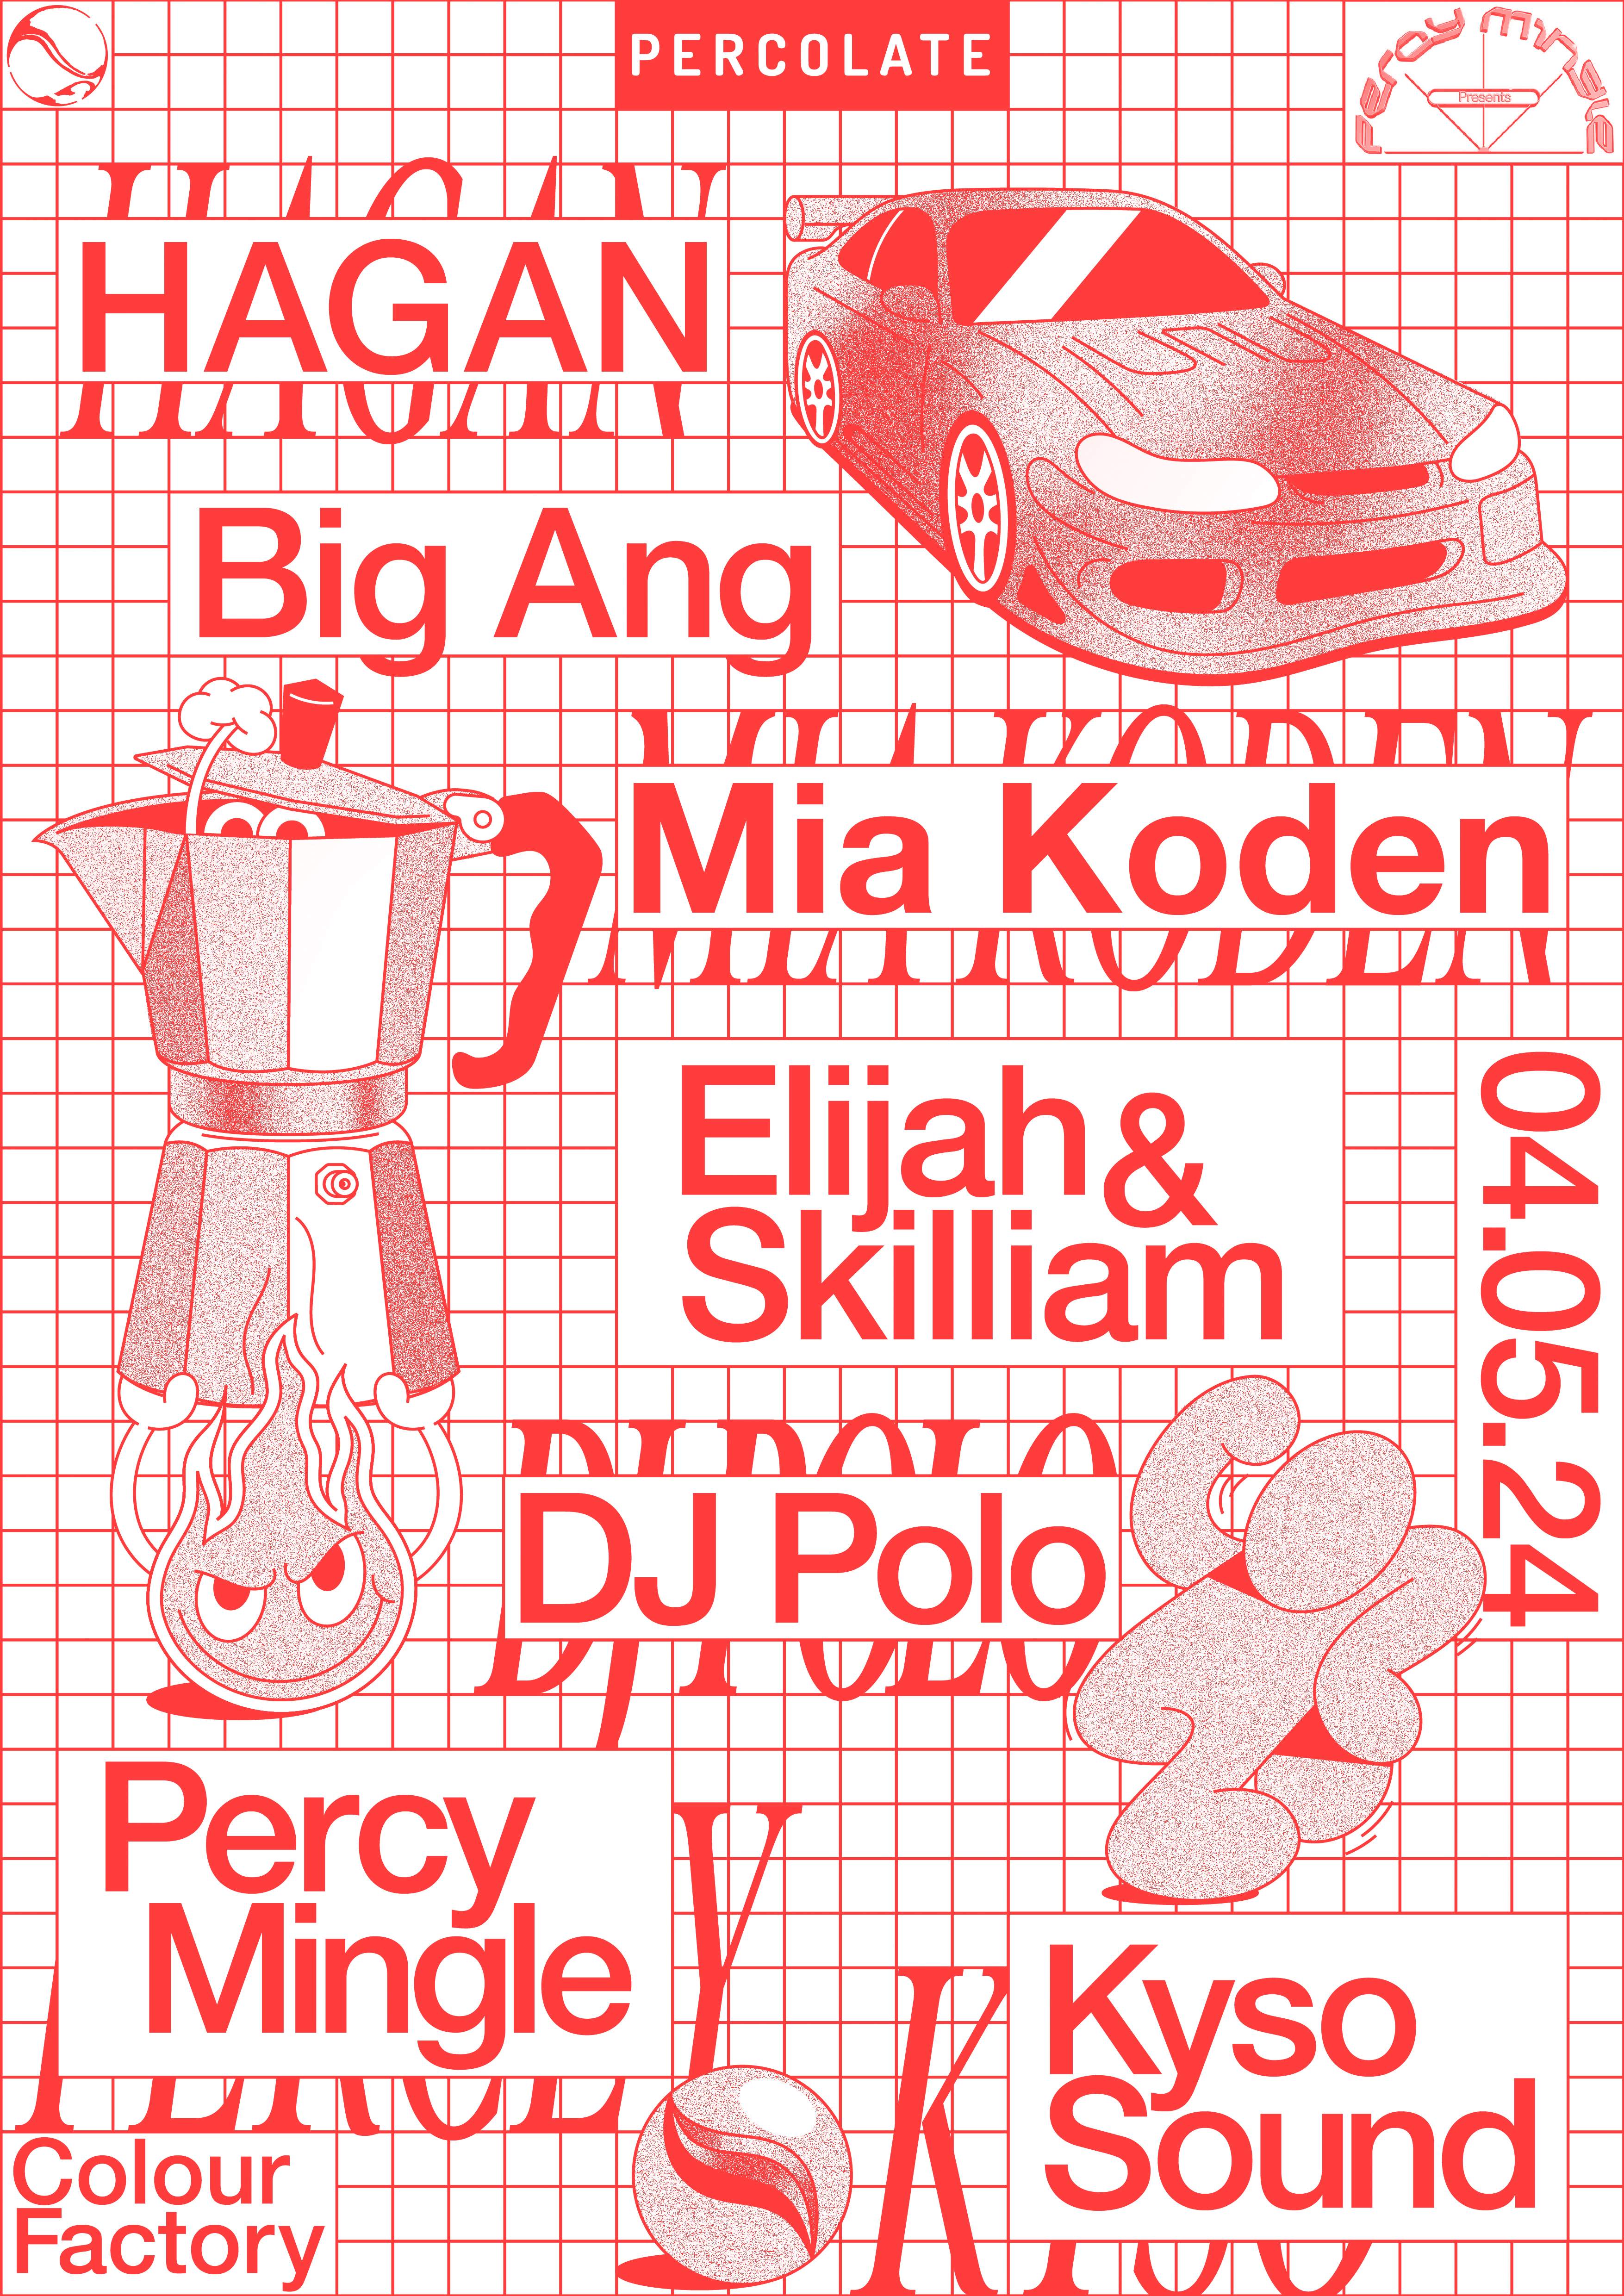 QYSP After party:Elijah & Skilliam, Mia Koden, Big Ang, DJ Polo,Hagan,Percy Mingle & Kyso Sound - フライヤー表